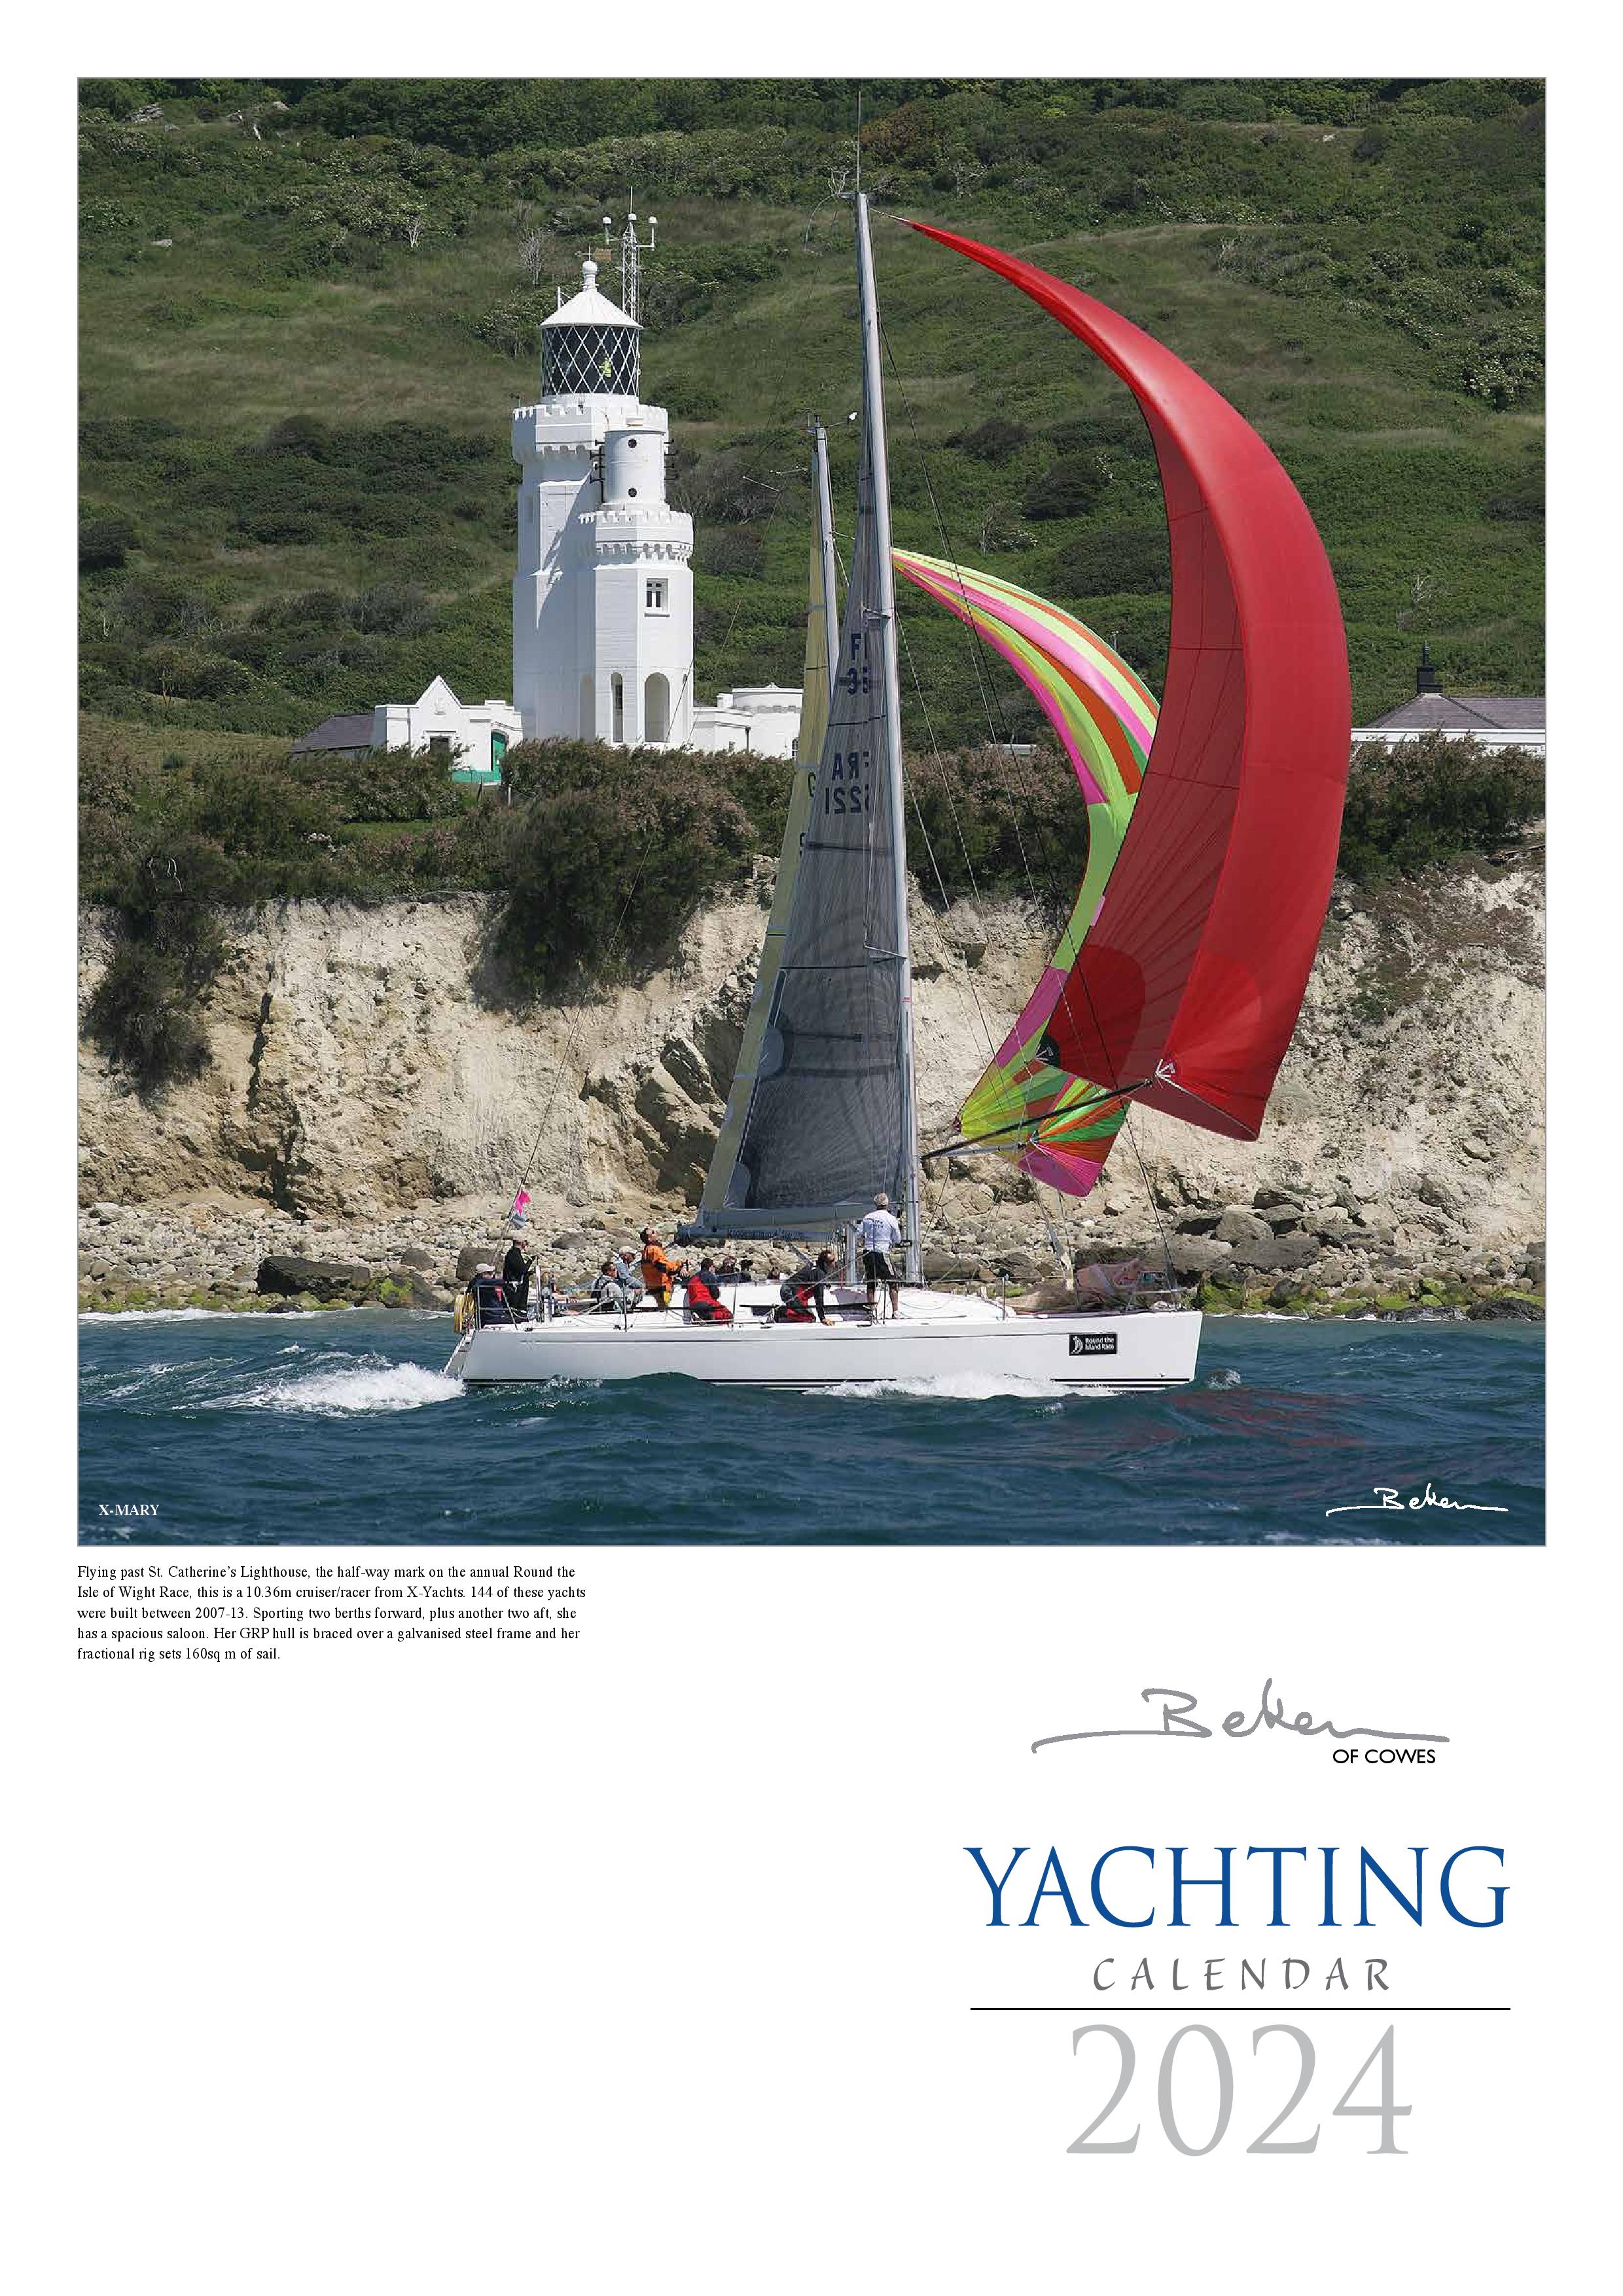 Yachting Calendar